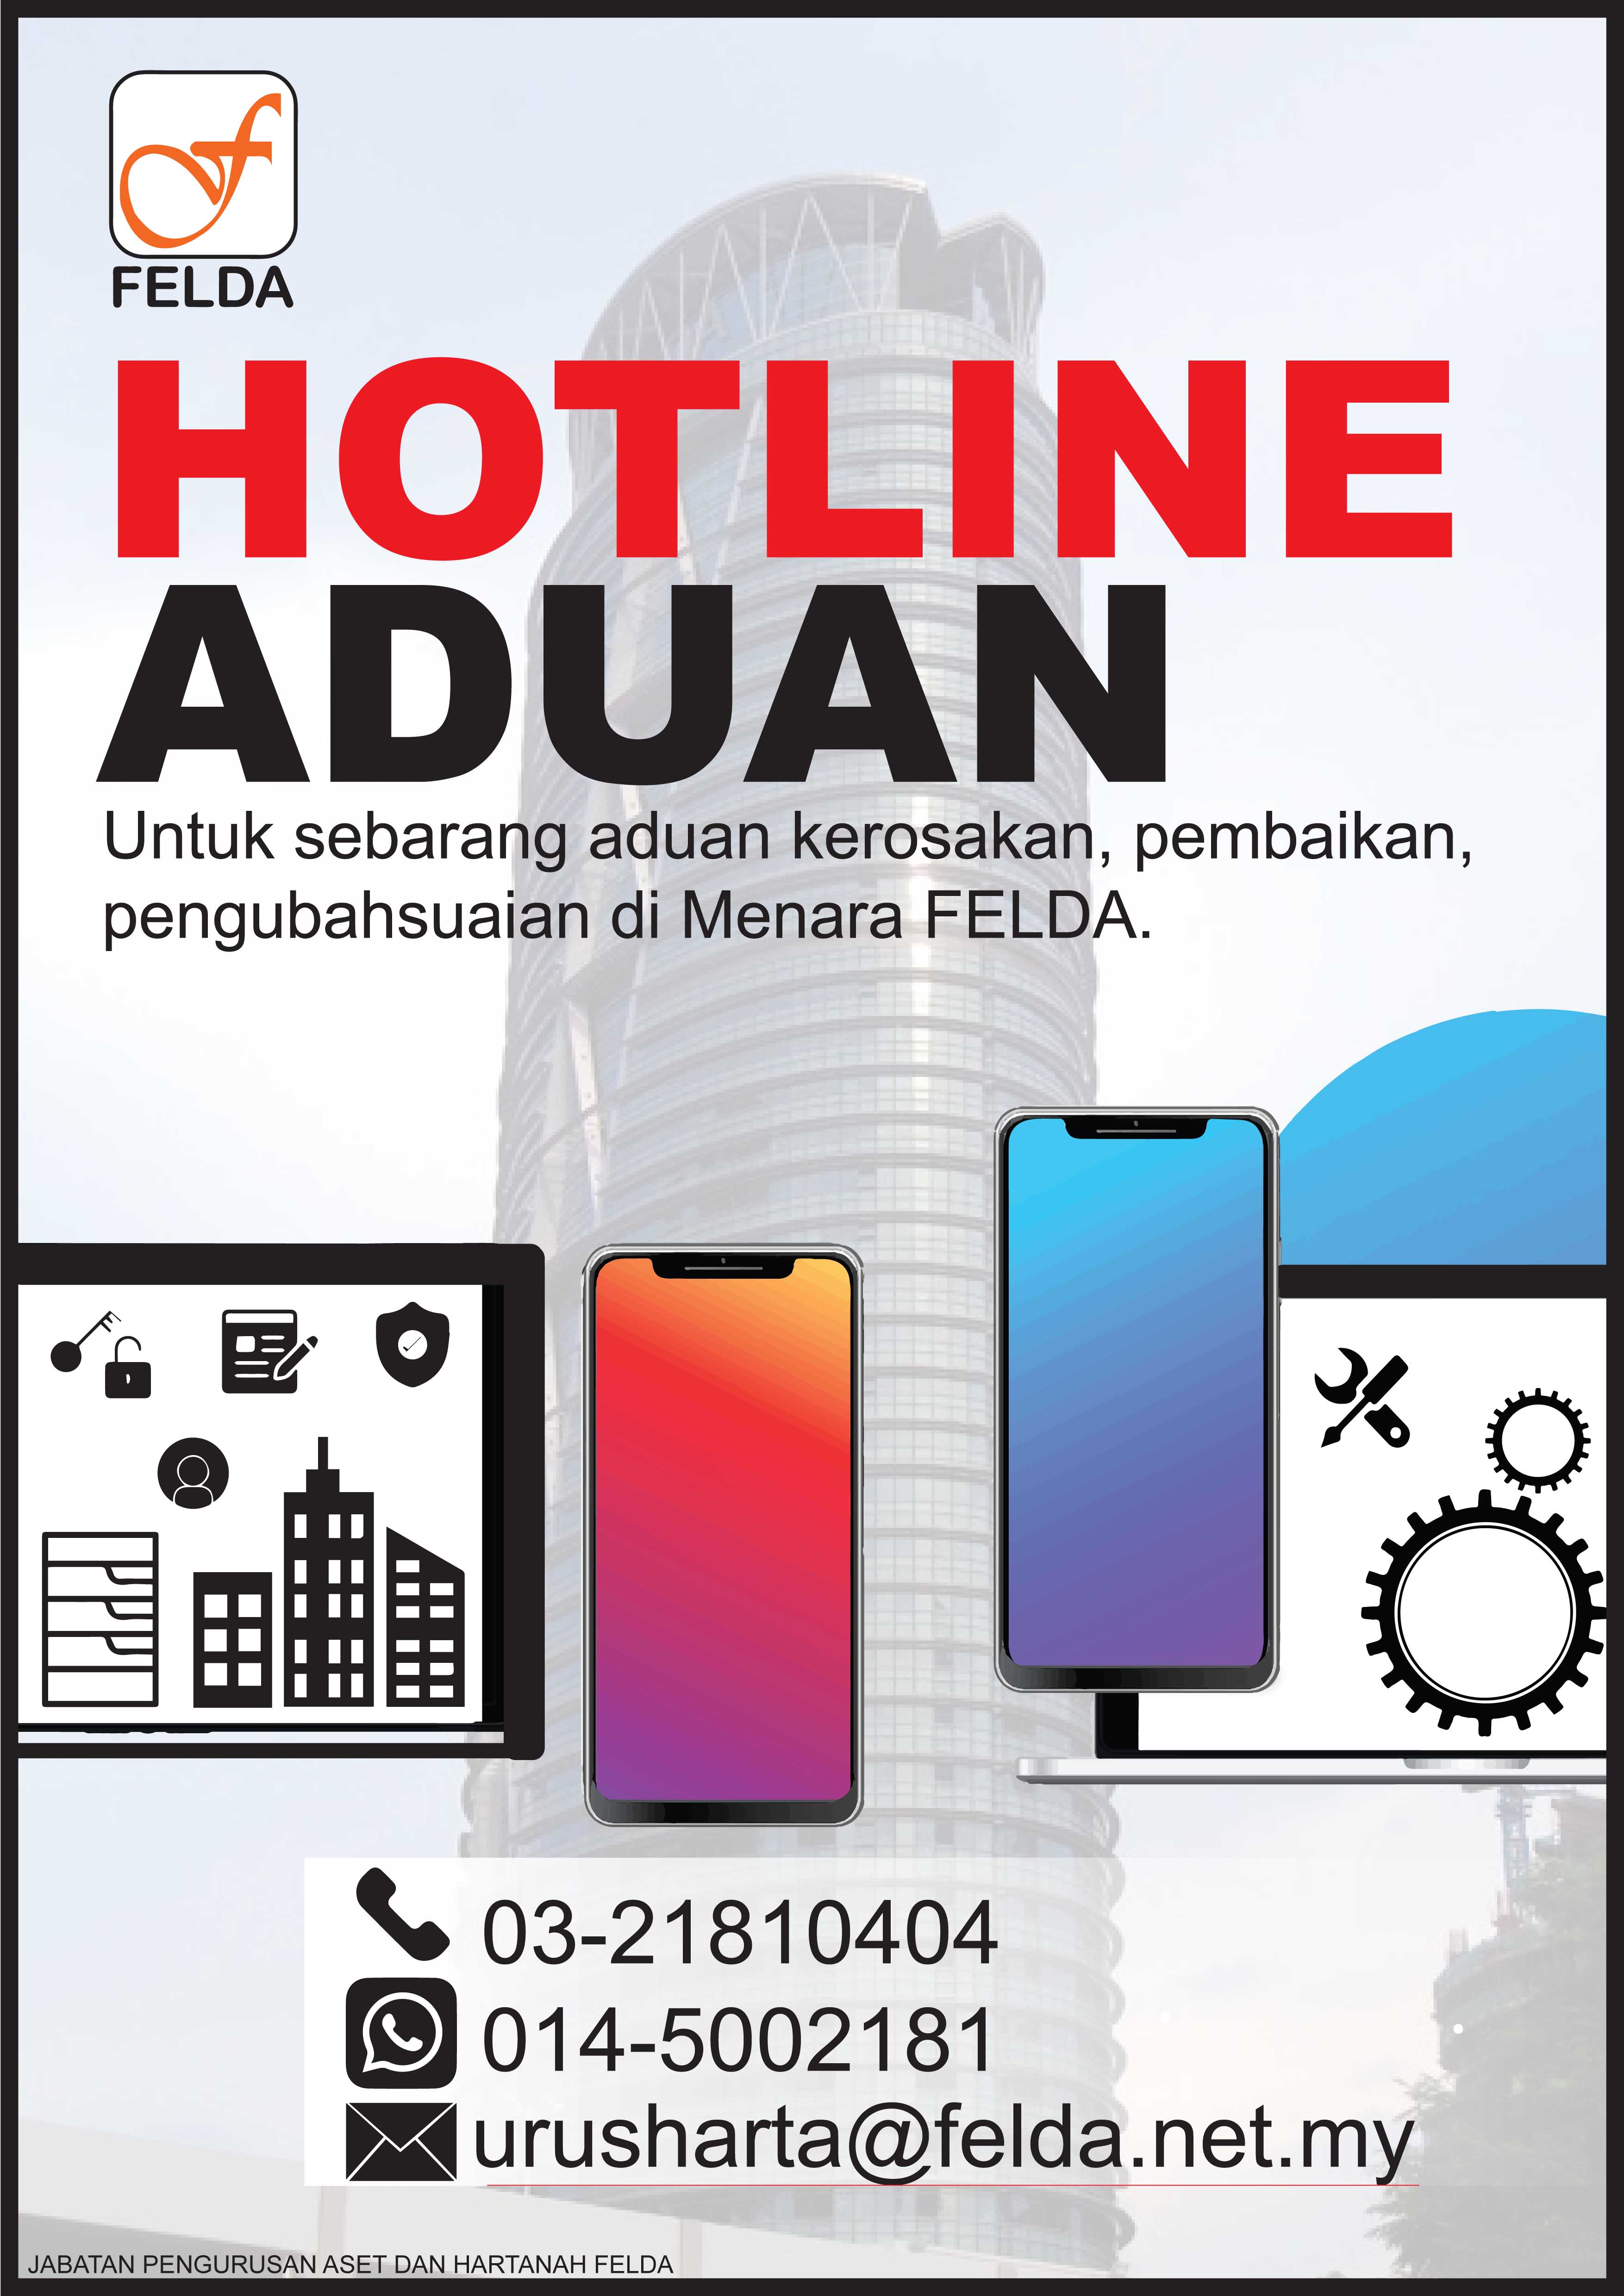 Hotline Aduan